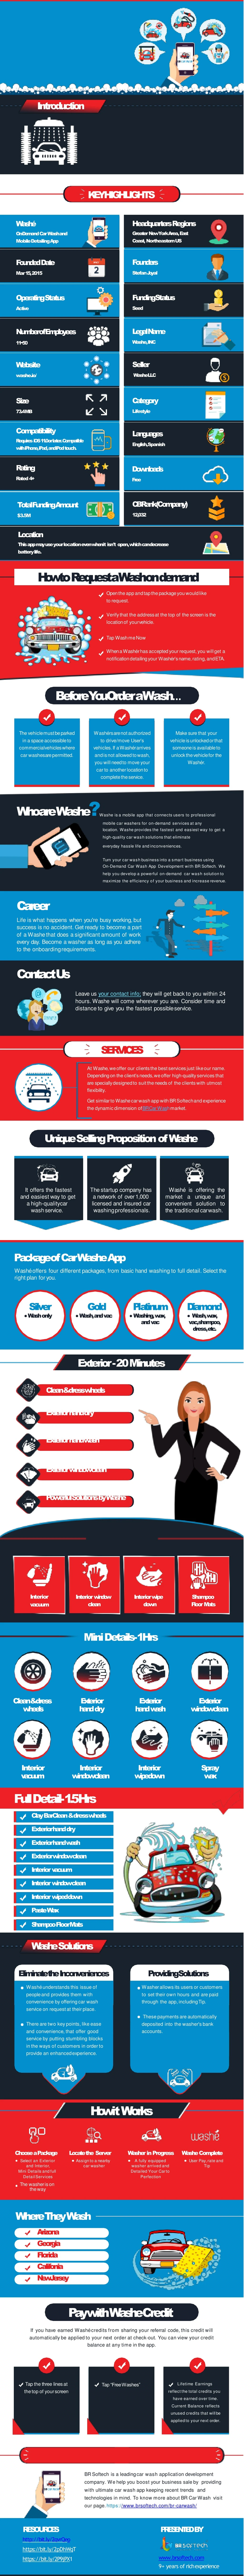 wash on demand car wash app success story